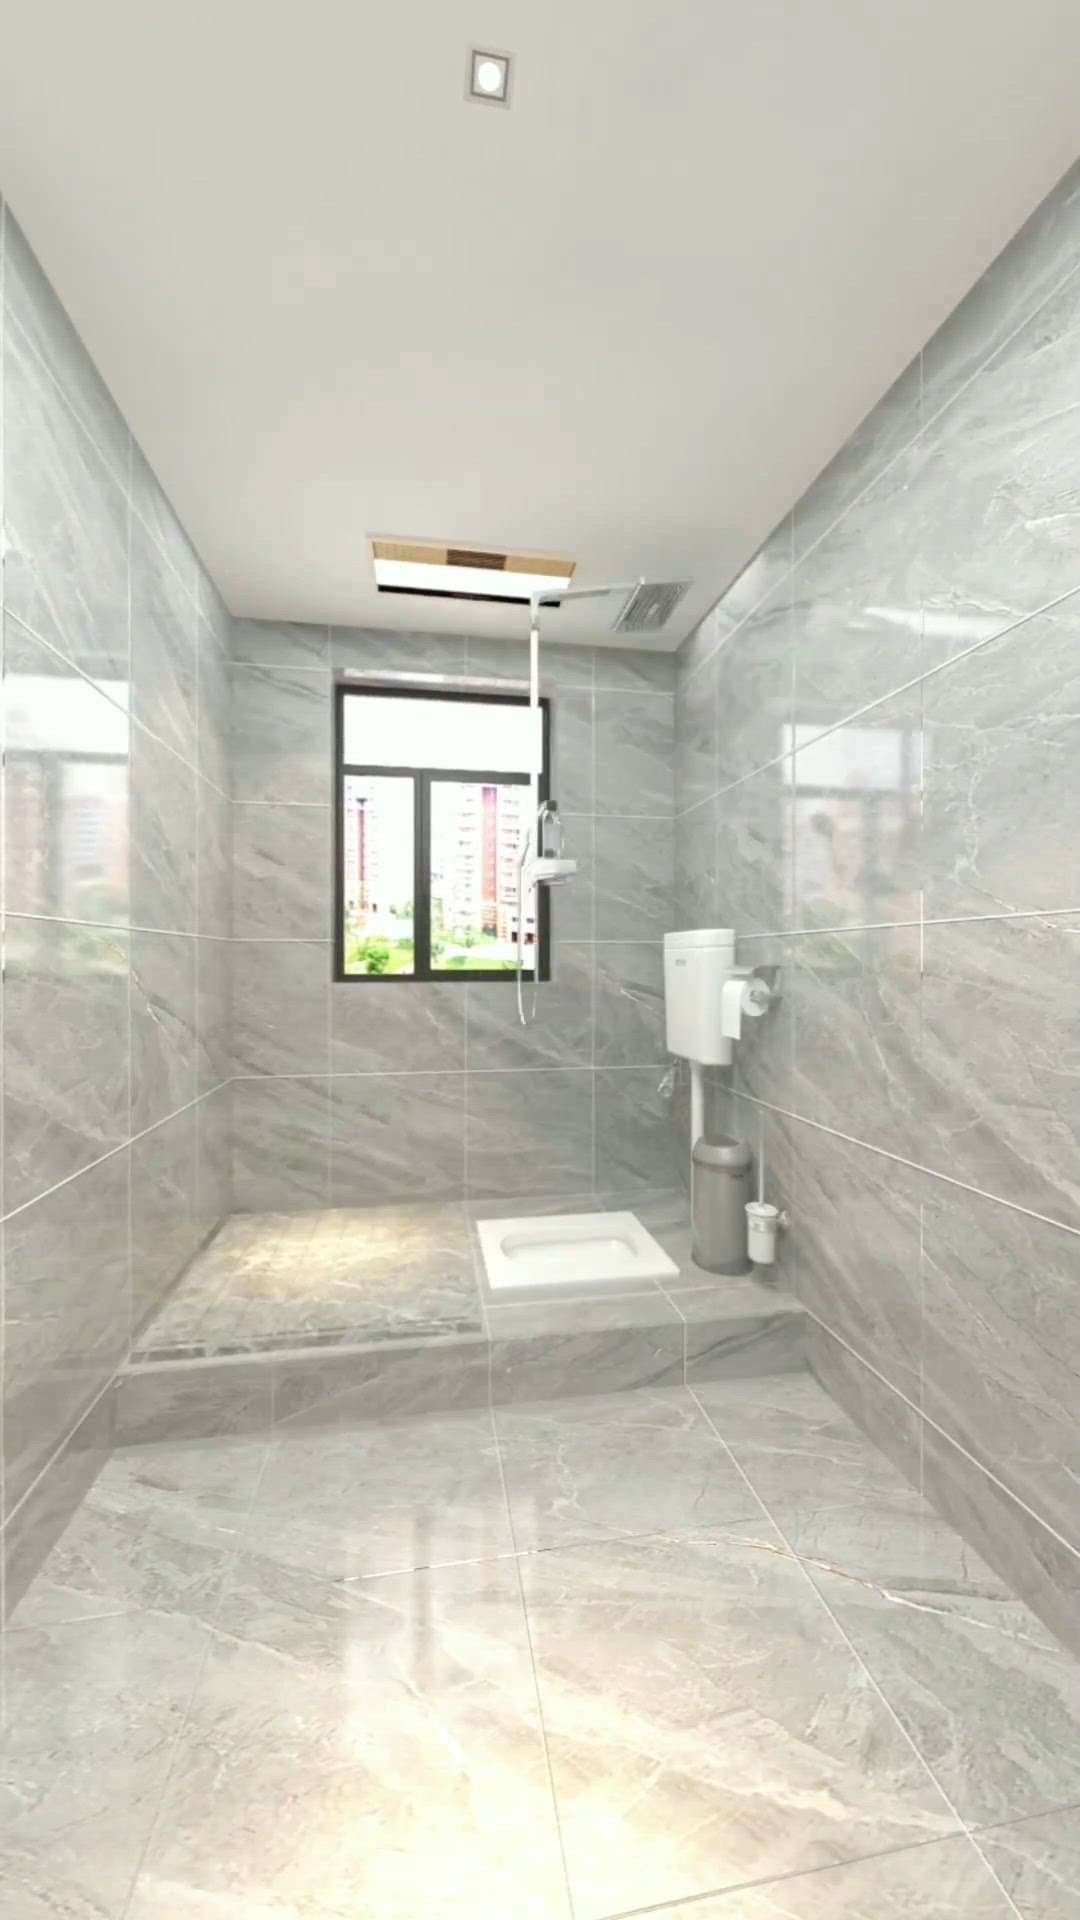 bathroom tiles 
#tiles
#BathroomRenovation  #BathroomIdeas